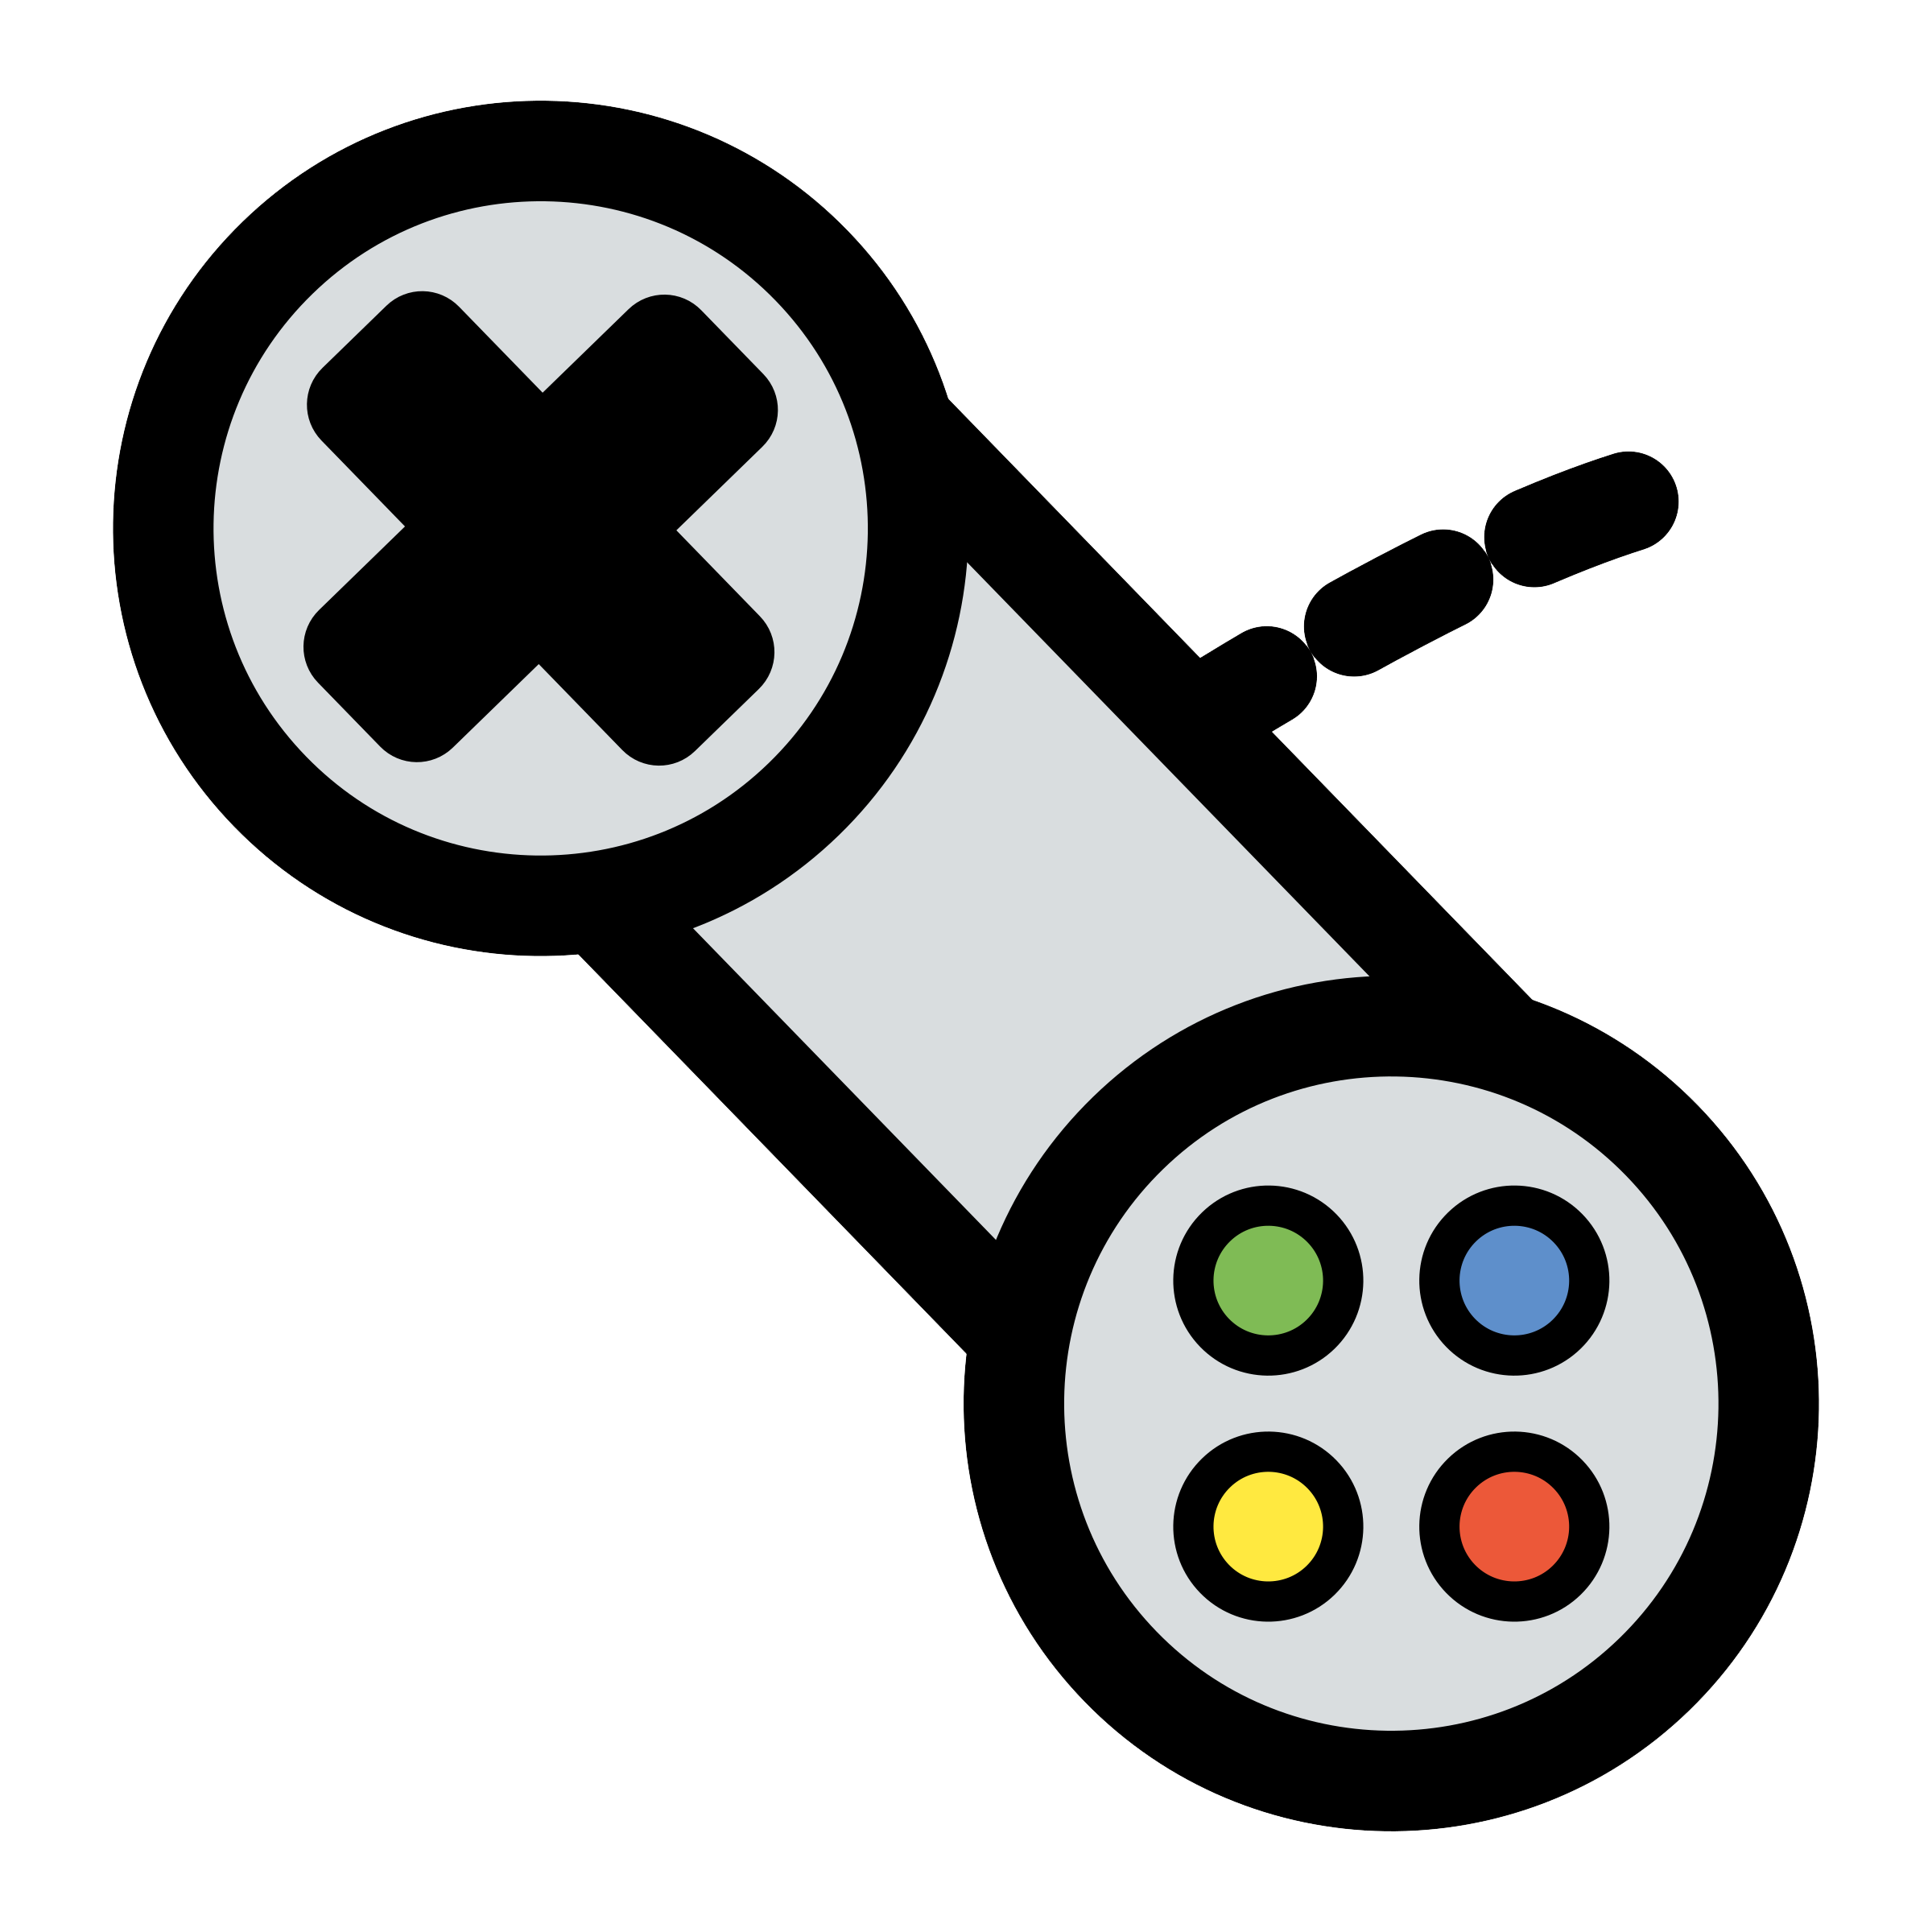 Game Logo PNG Transparent Images Free Download